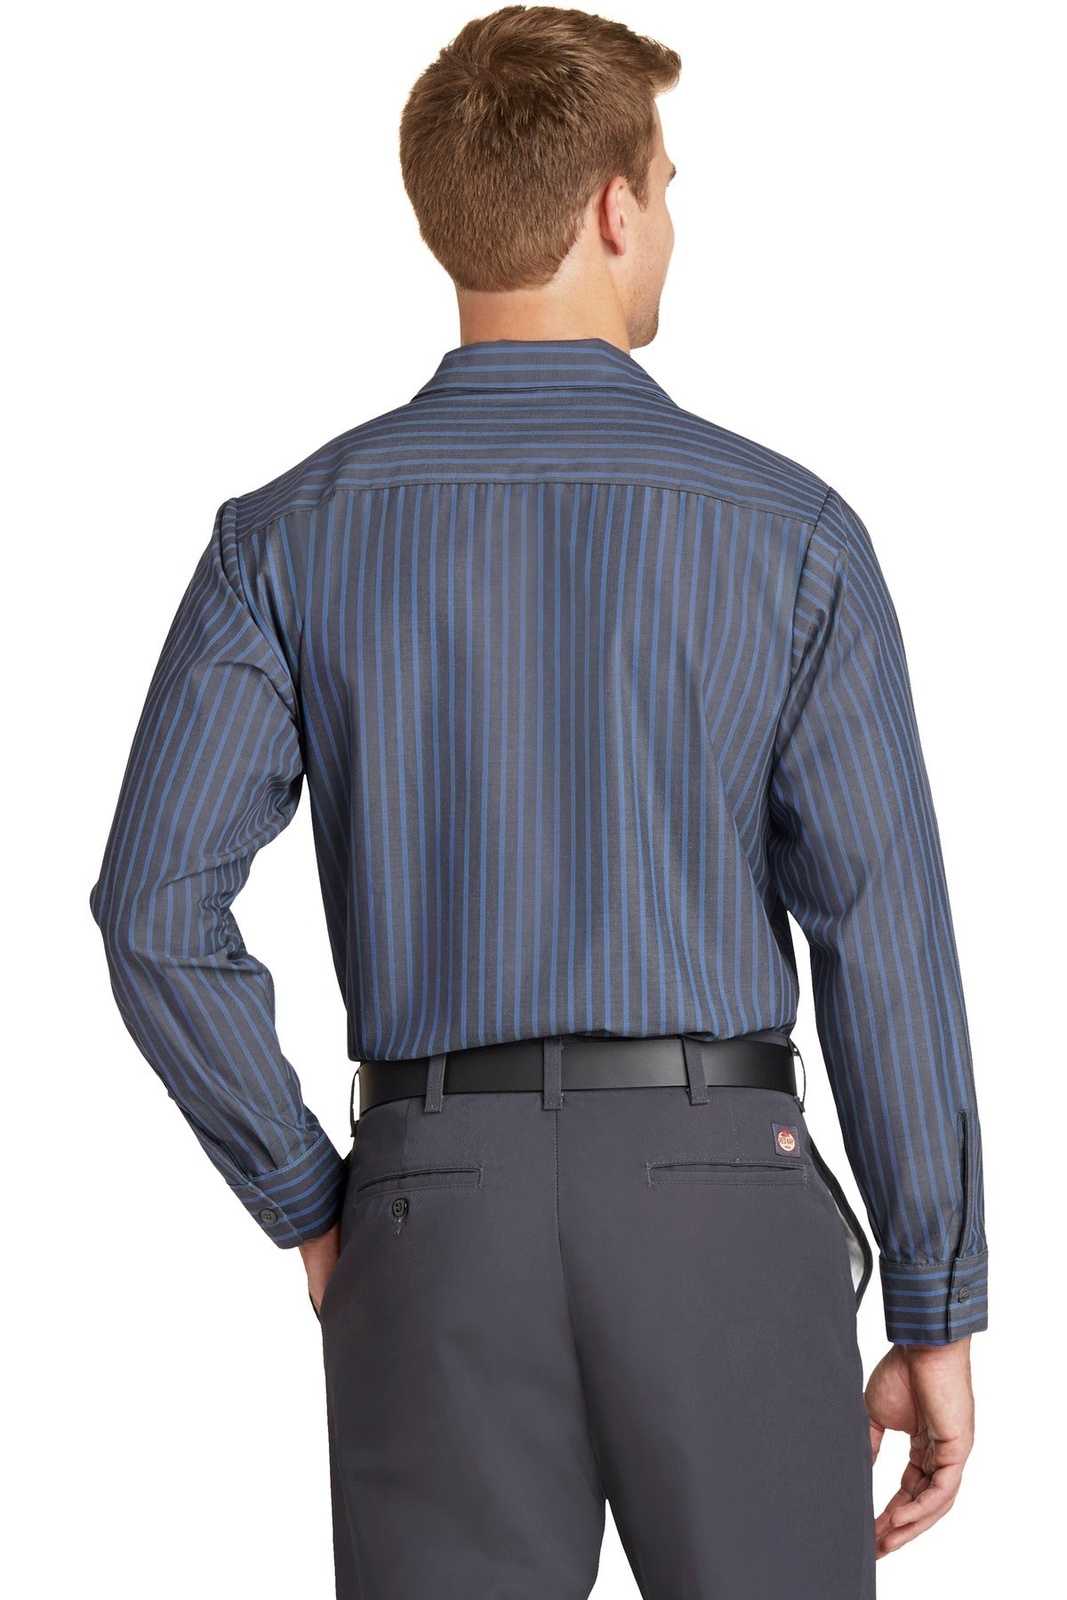 Red Kap CS10 Long Sleeve Striped Industrial Work Shirt - Gray/ Blue - HIT a Double - 1